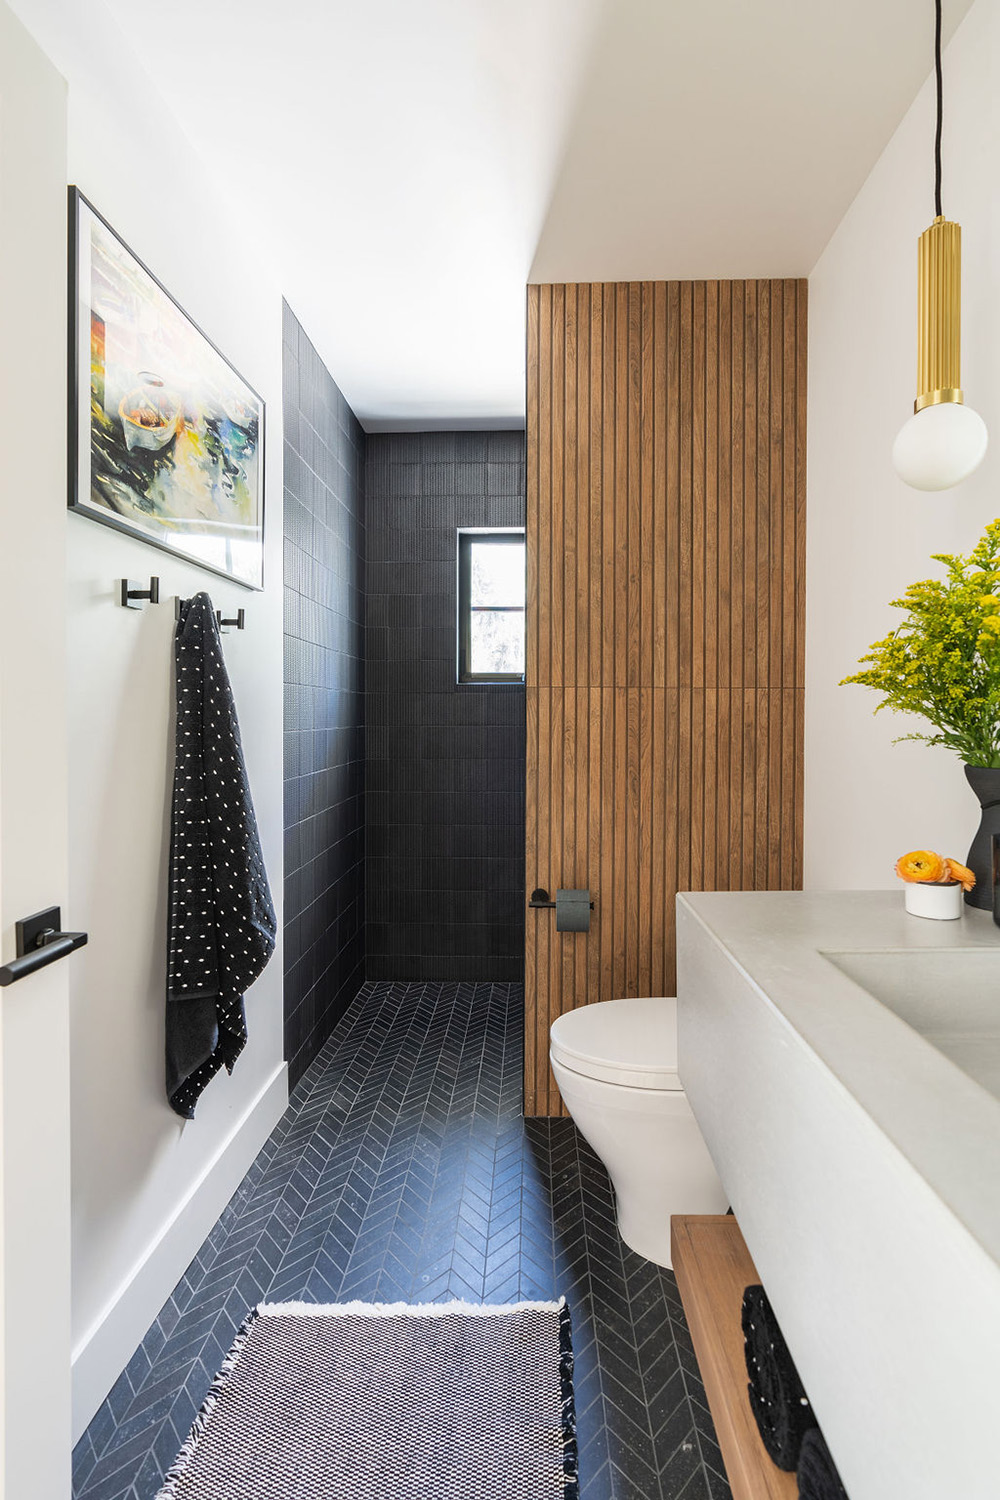 bathroom design with dark gray shower tiles, wood accent wall and herringbone floor tile